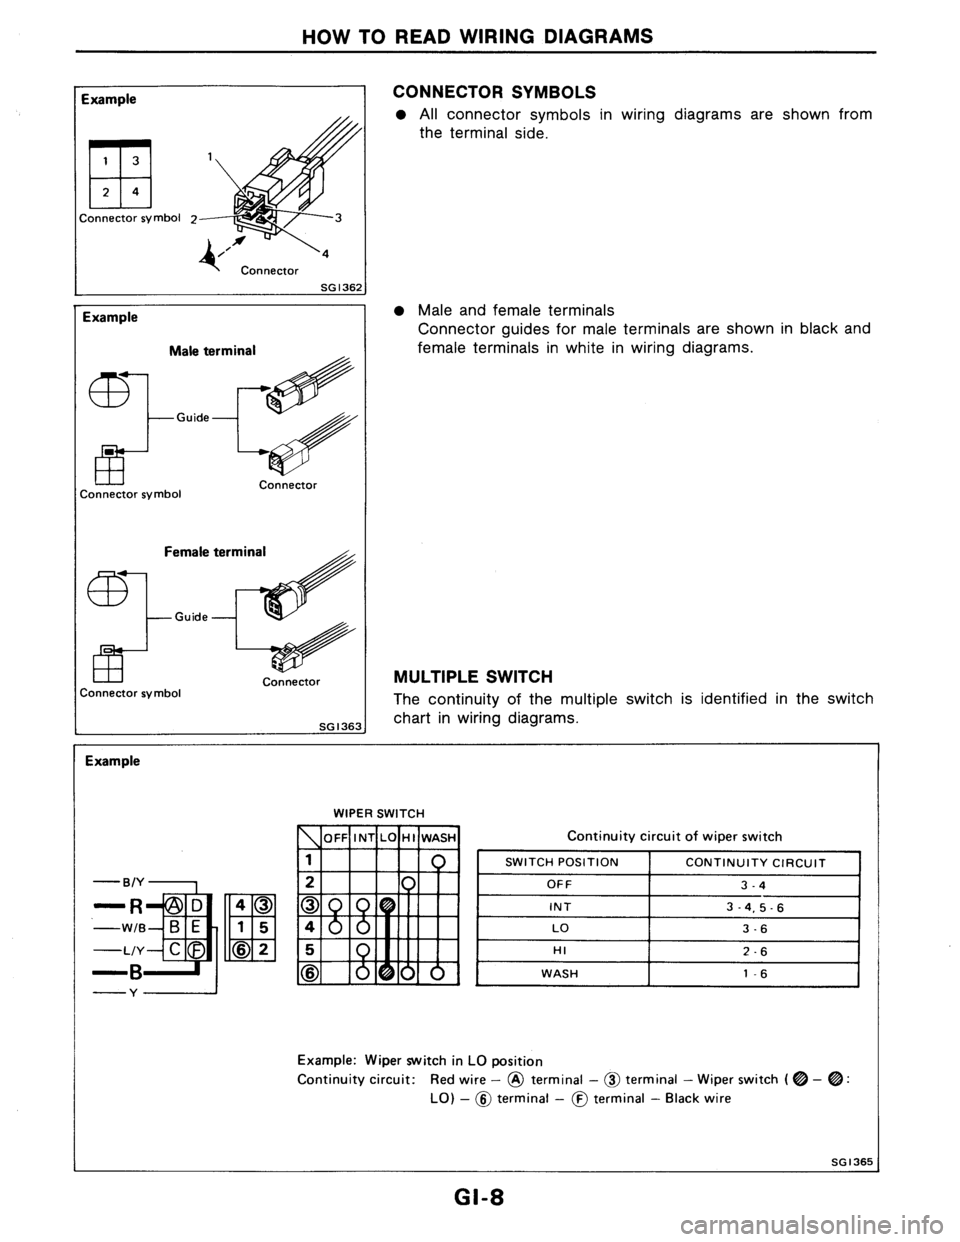 NISSAN AXXESS 1990  Service Repair Manual 